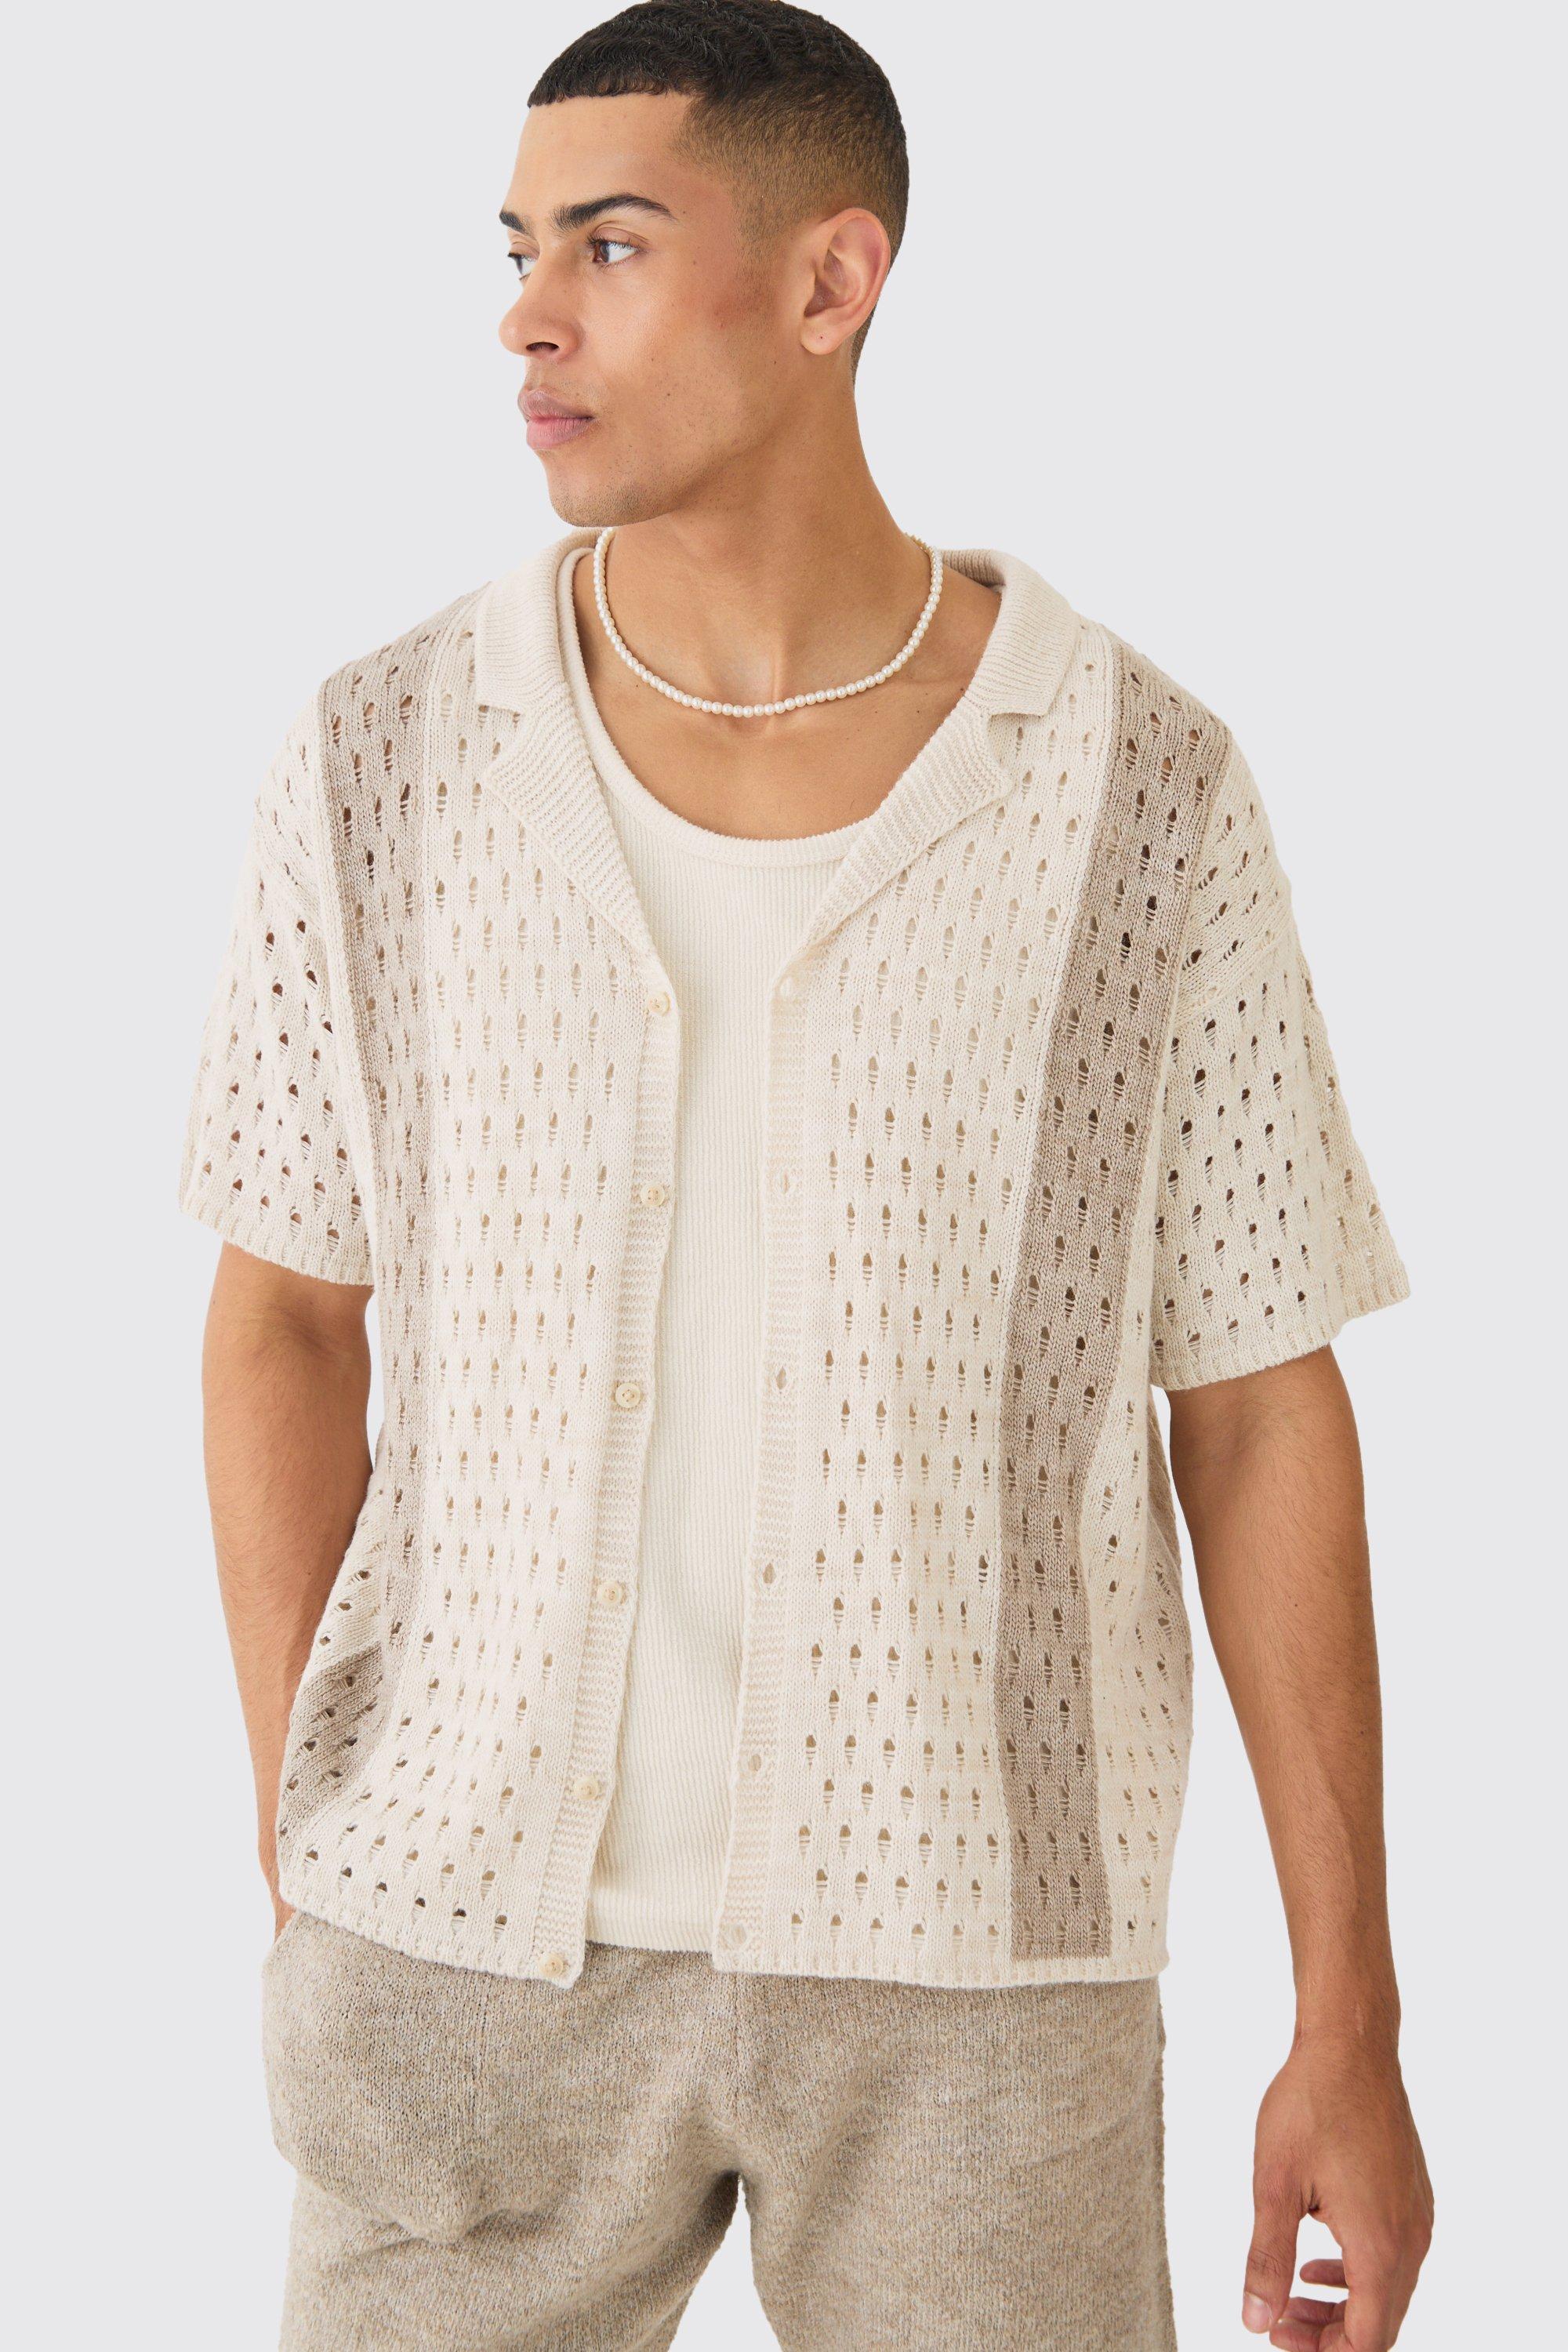 Image of Oversized Boxy Open Stitch Stripe Knit Shirt In Ecru, Cream